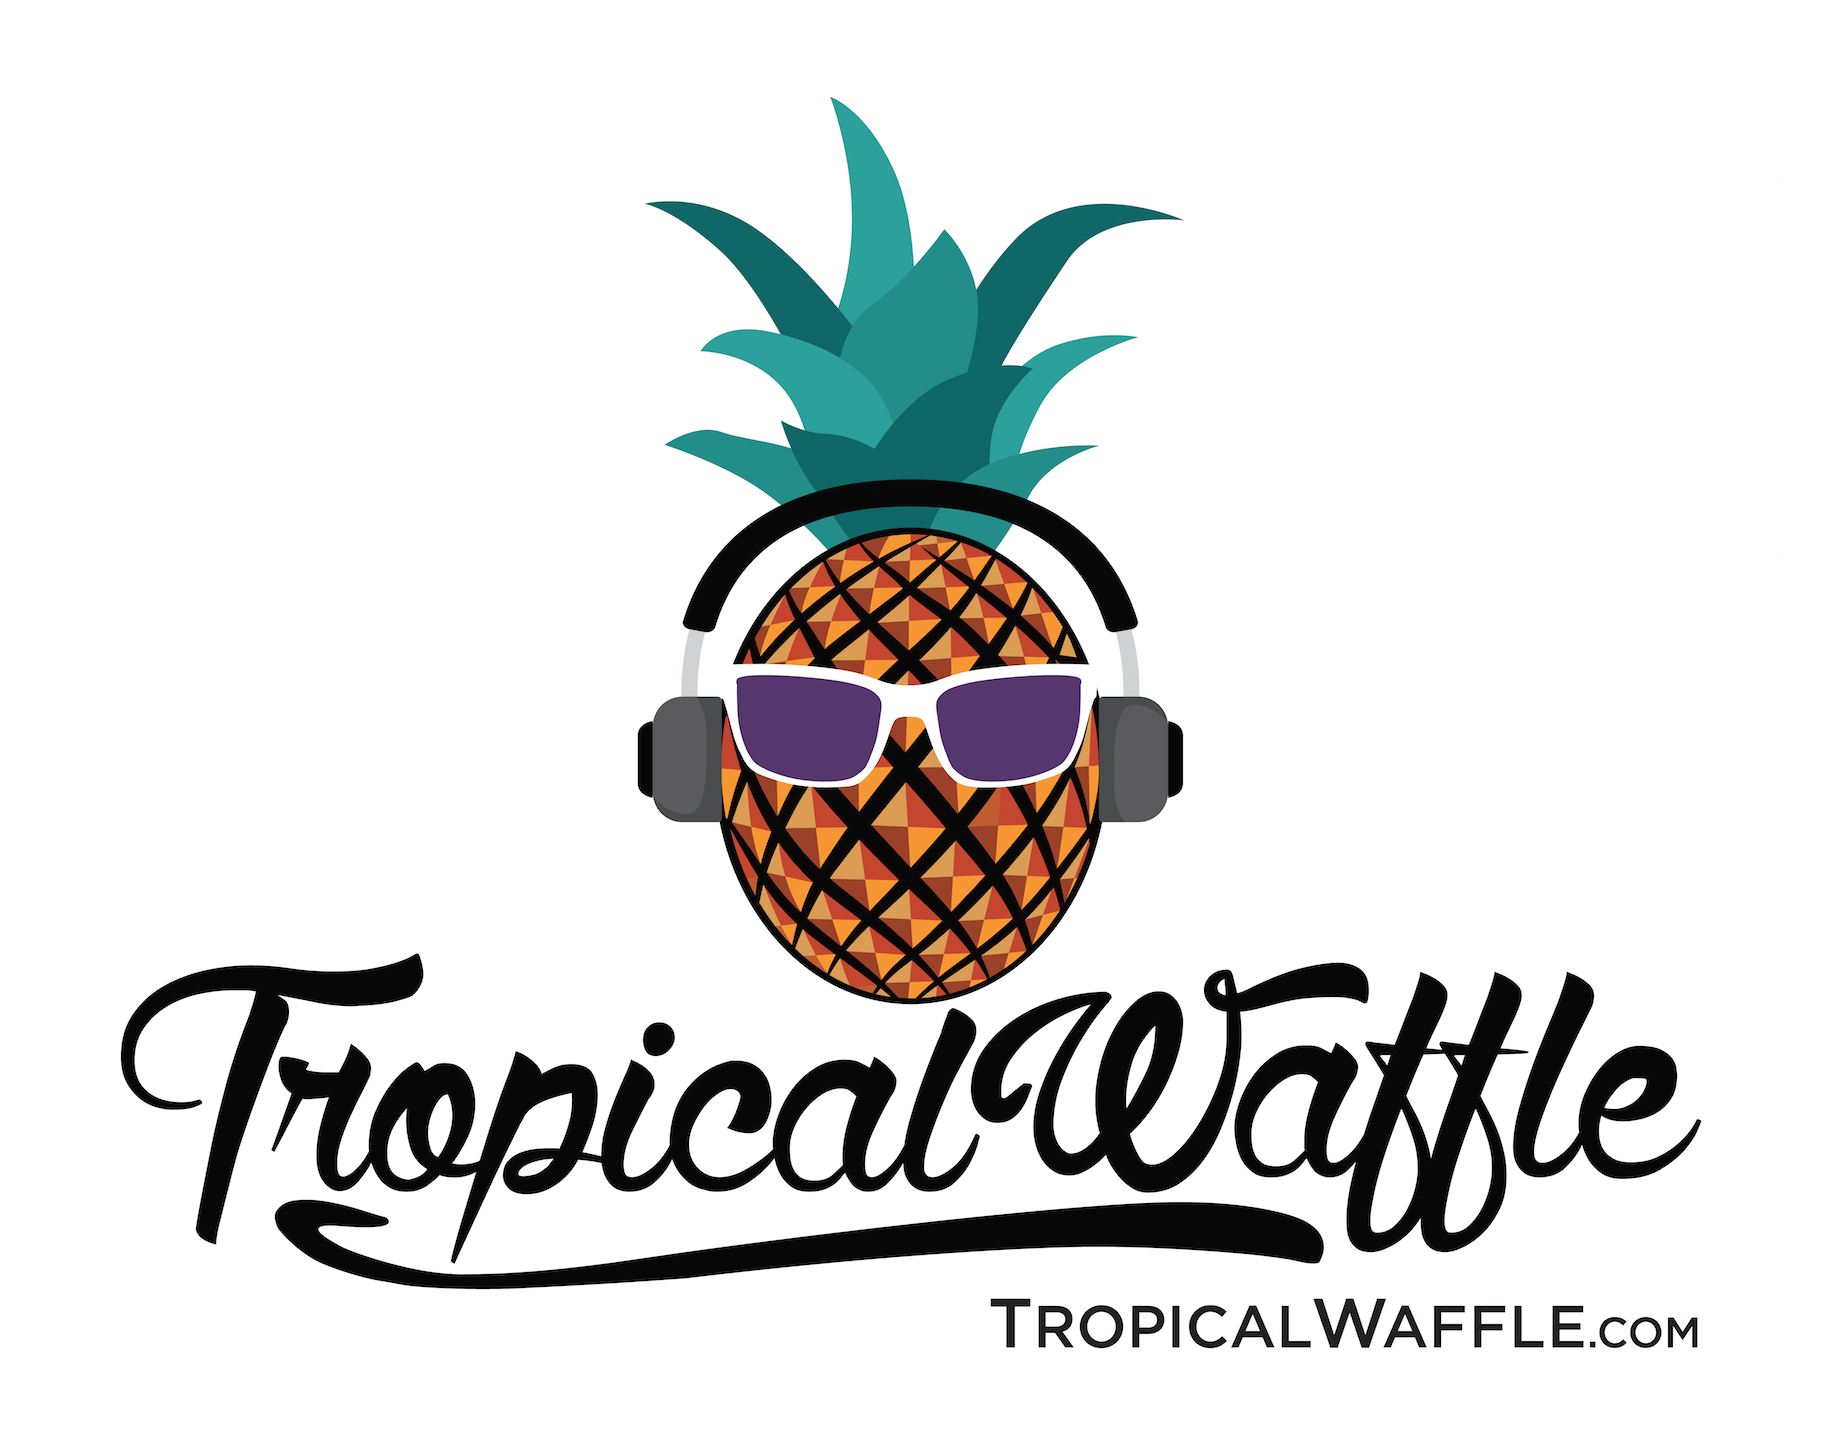 Tropical Waffle